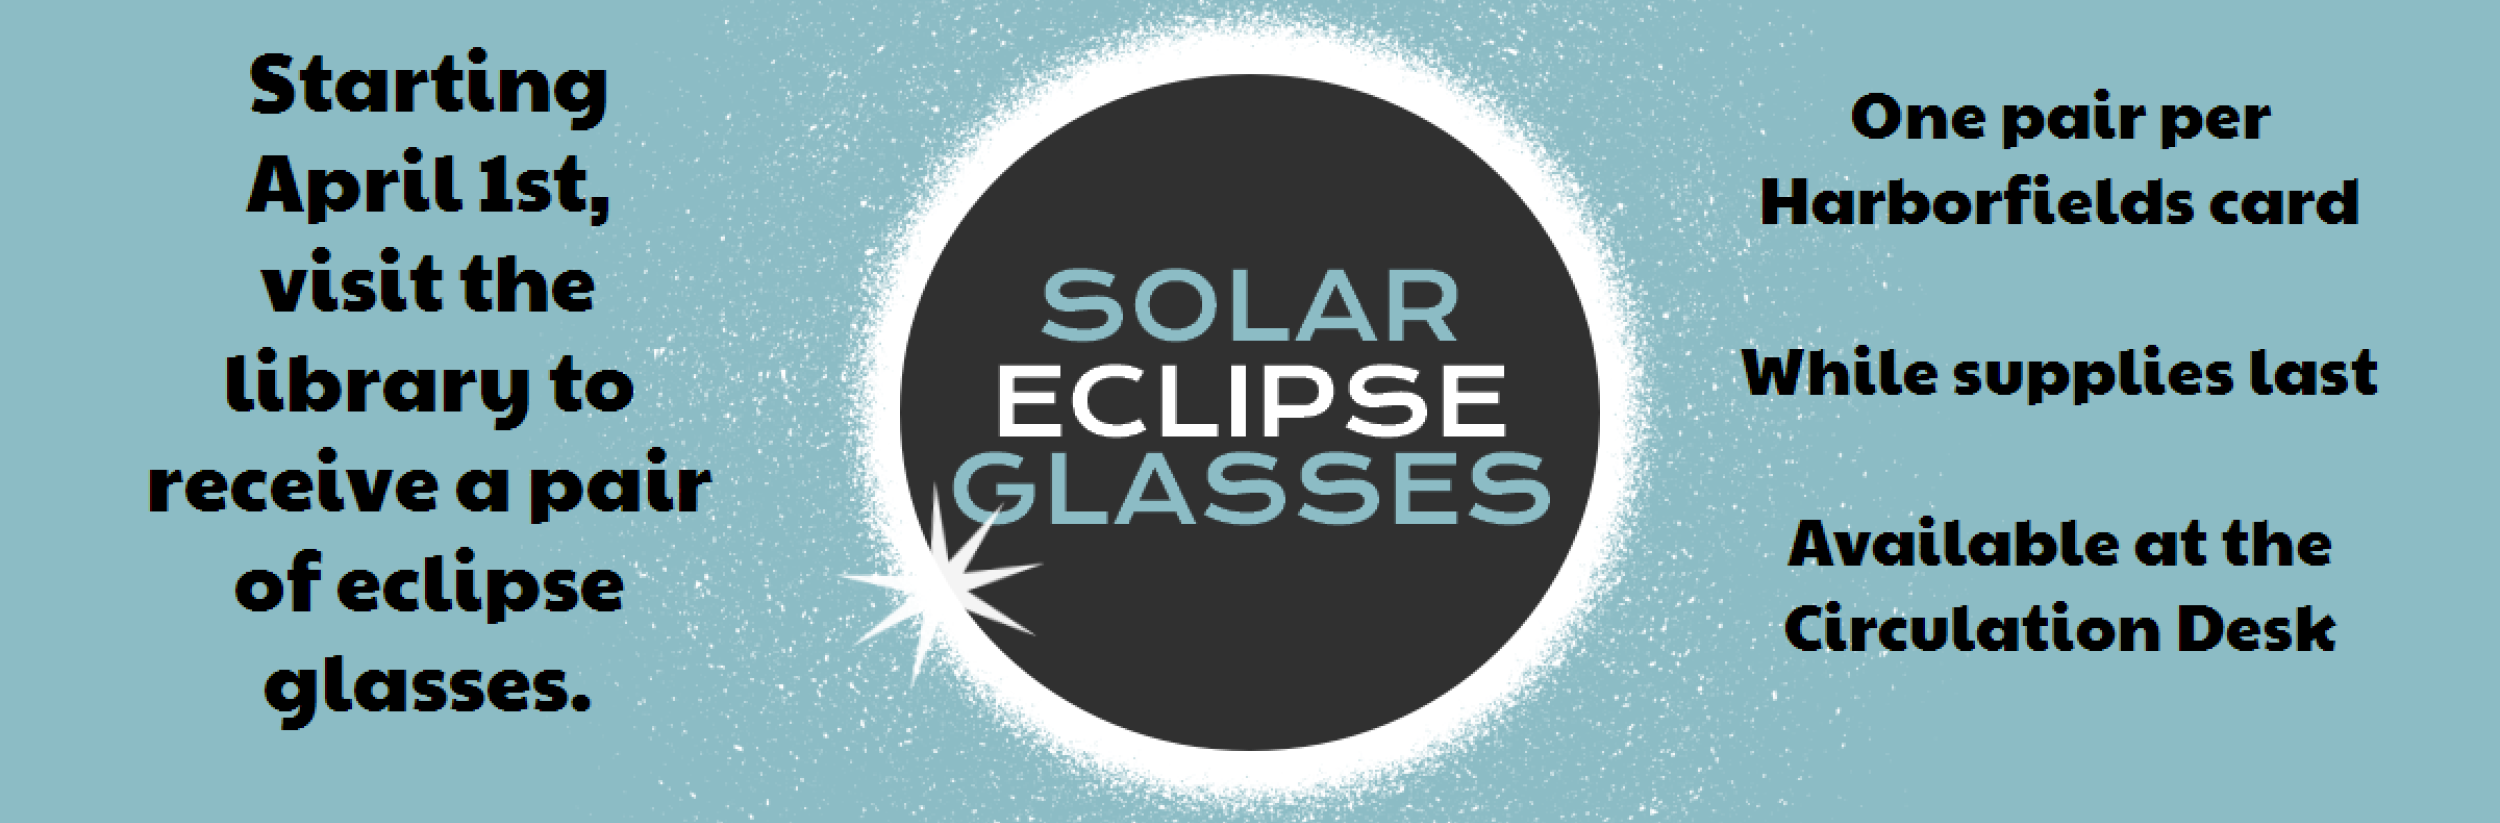 Image for "Solar Eclipse Glasses, April 2024"